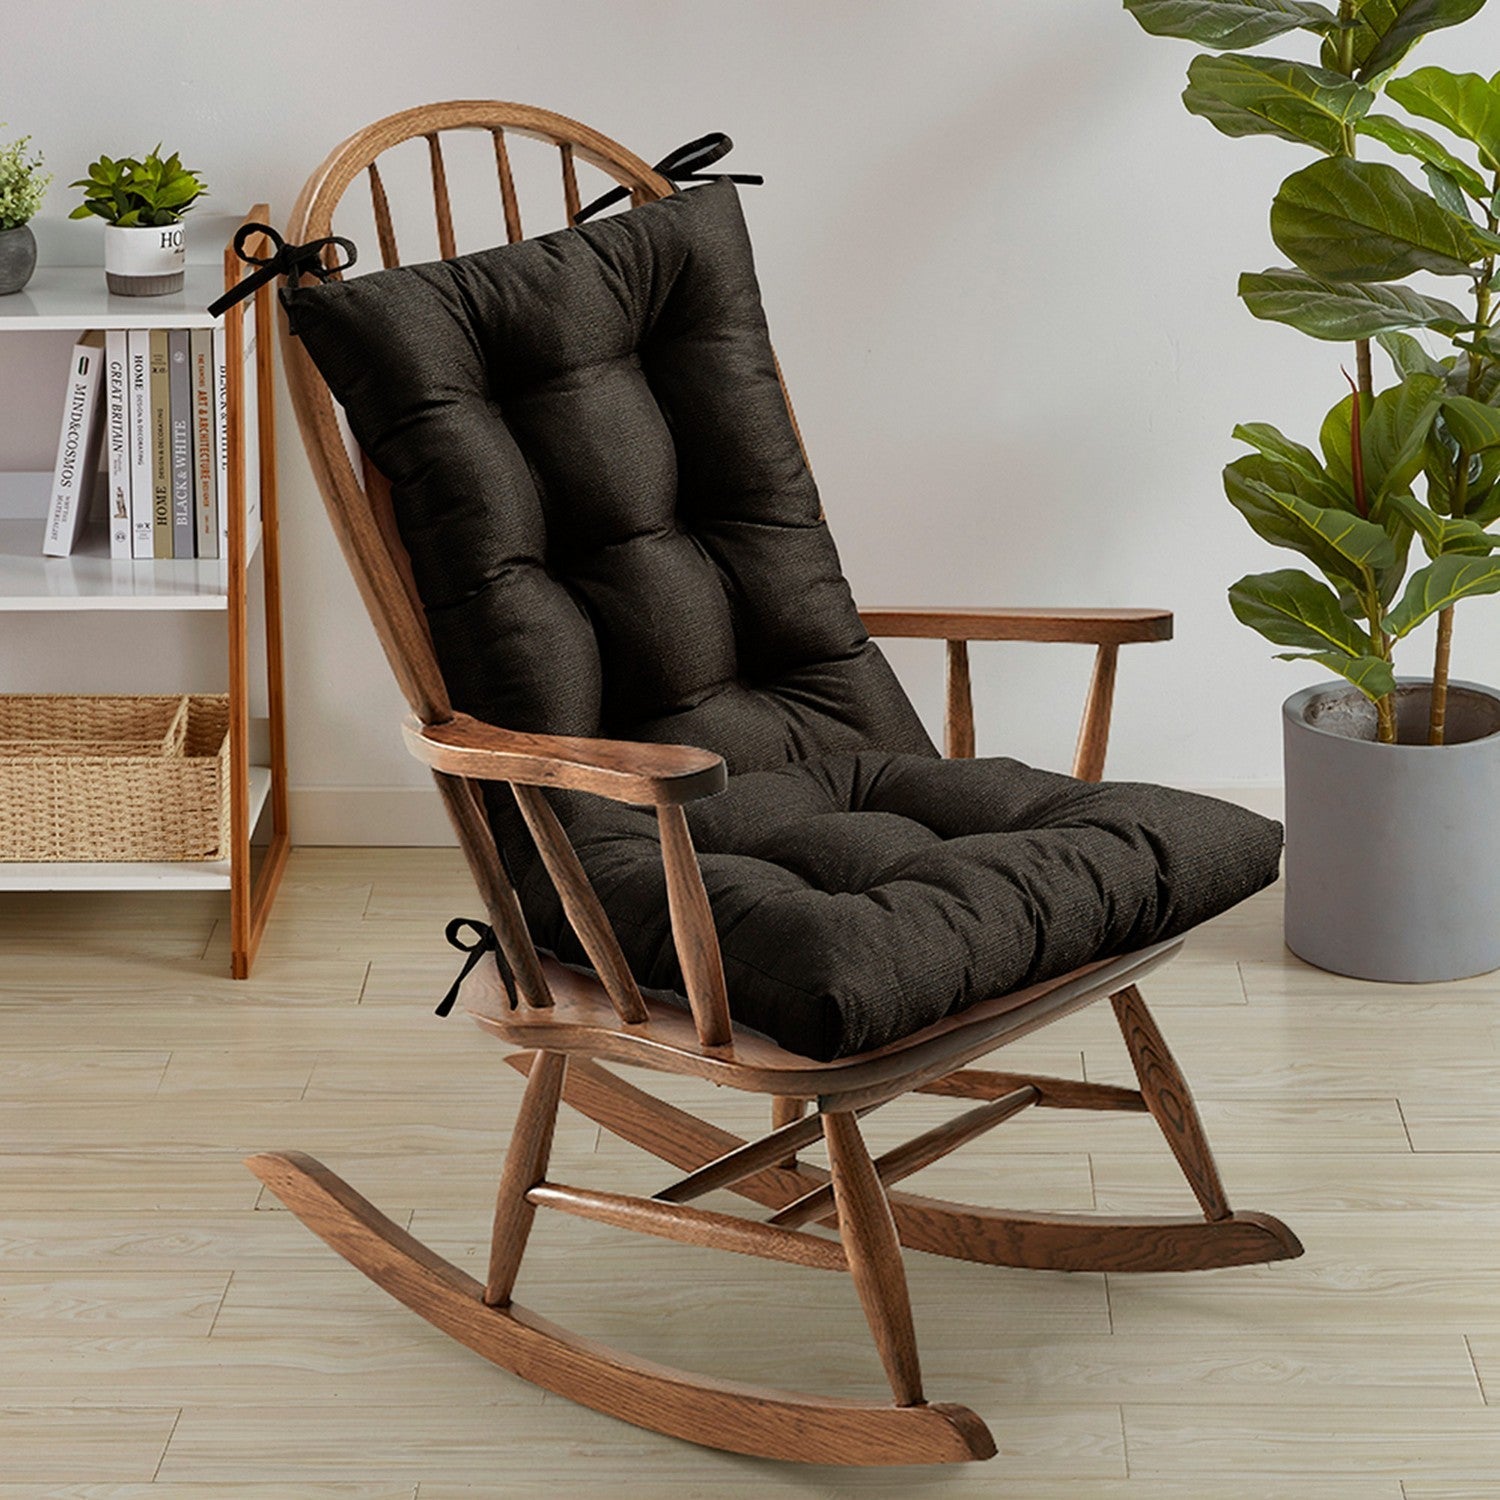 Tufted 2-Piece Rocking Chair Cushion Set Chocolate - Chair